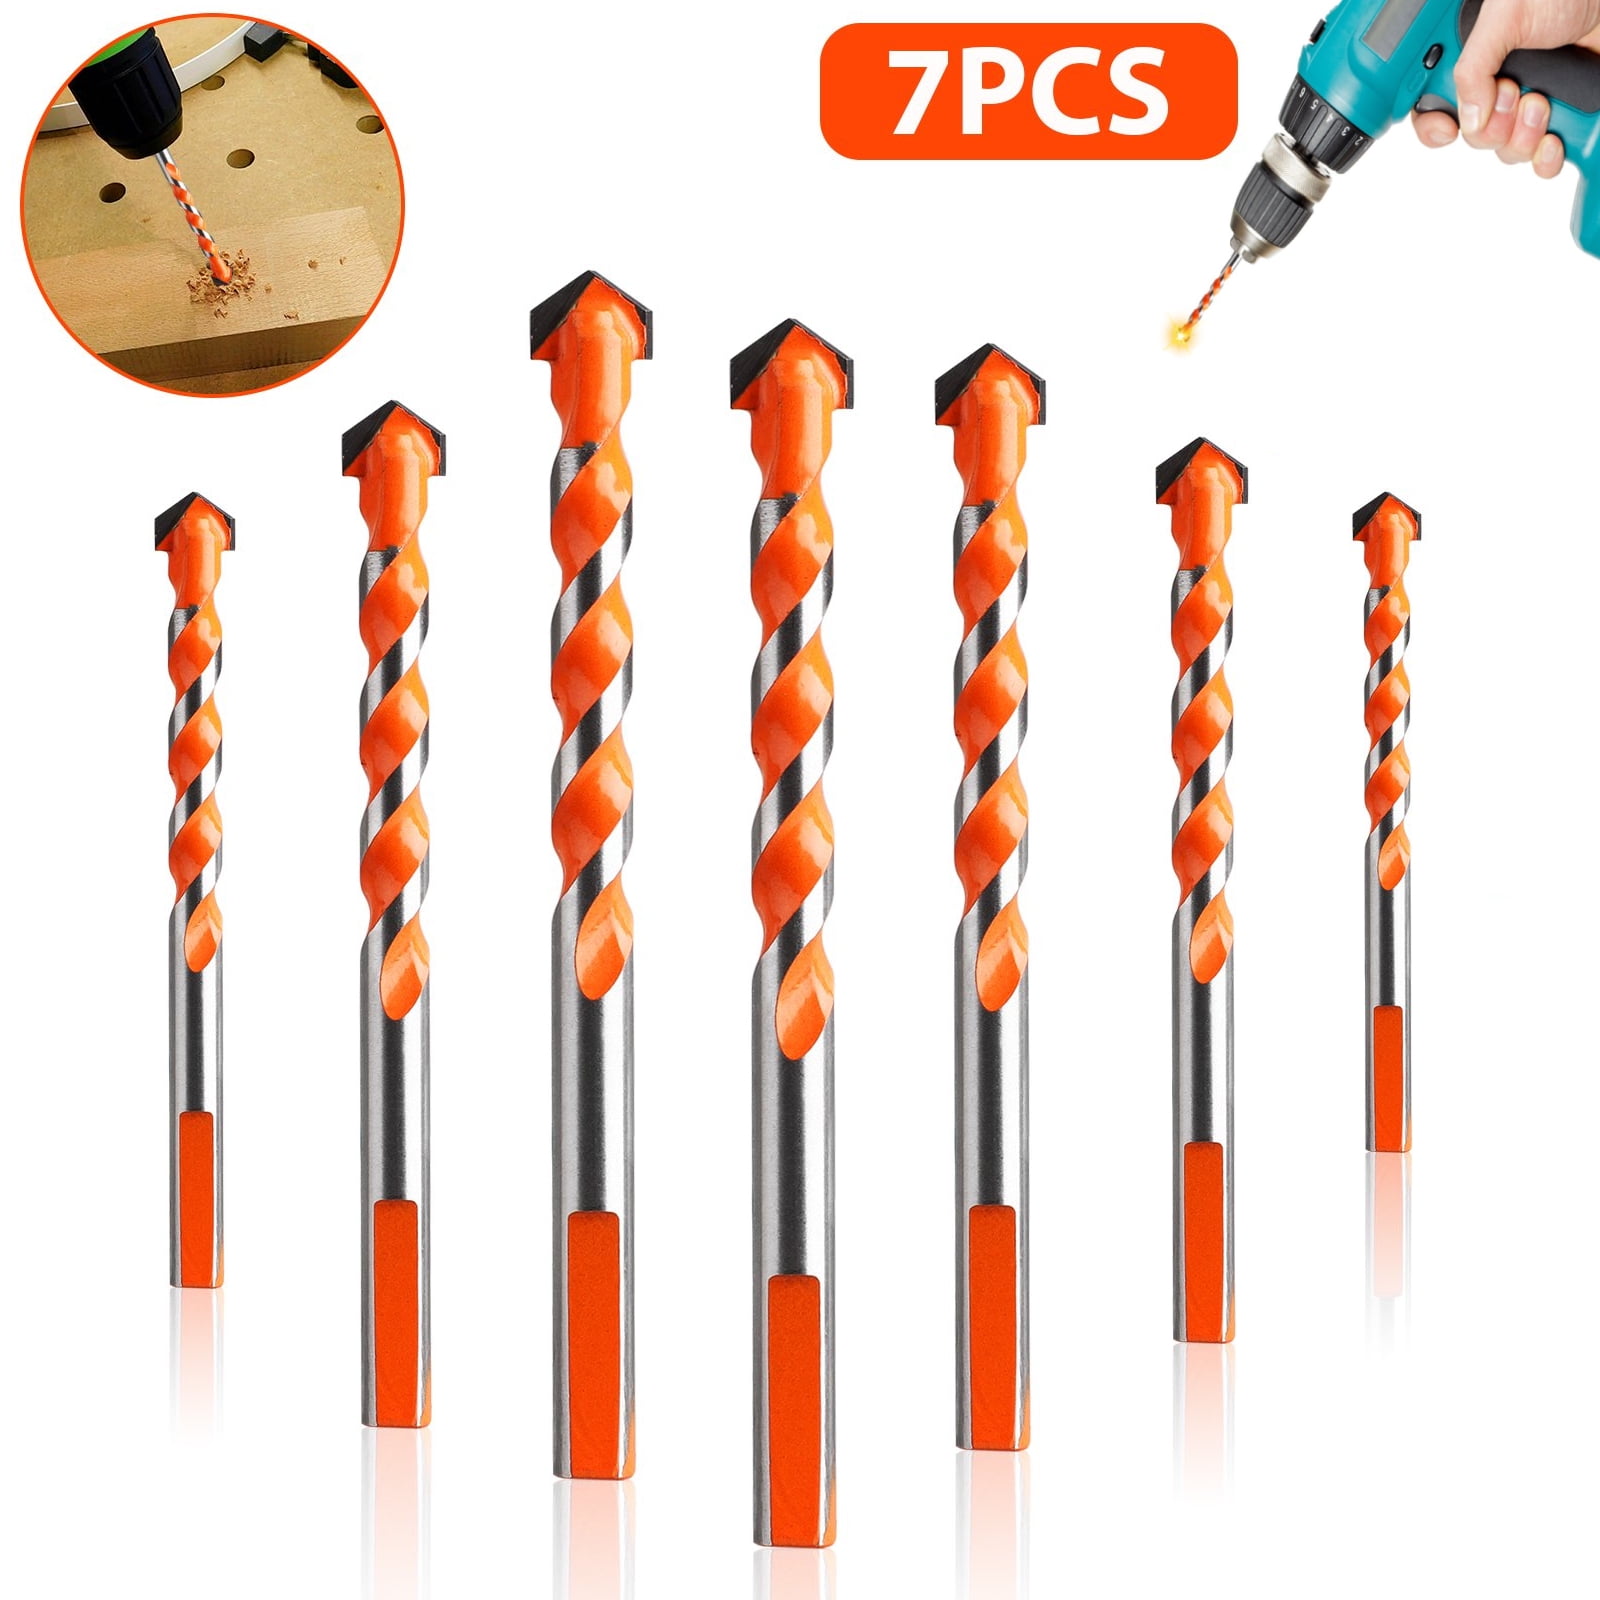 7PCS Multifunctional Drill Bits Wall Ceramic Glass Punching Hole Working Set 